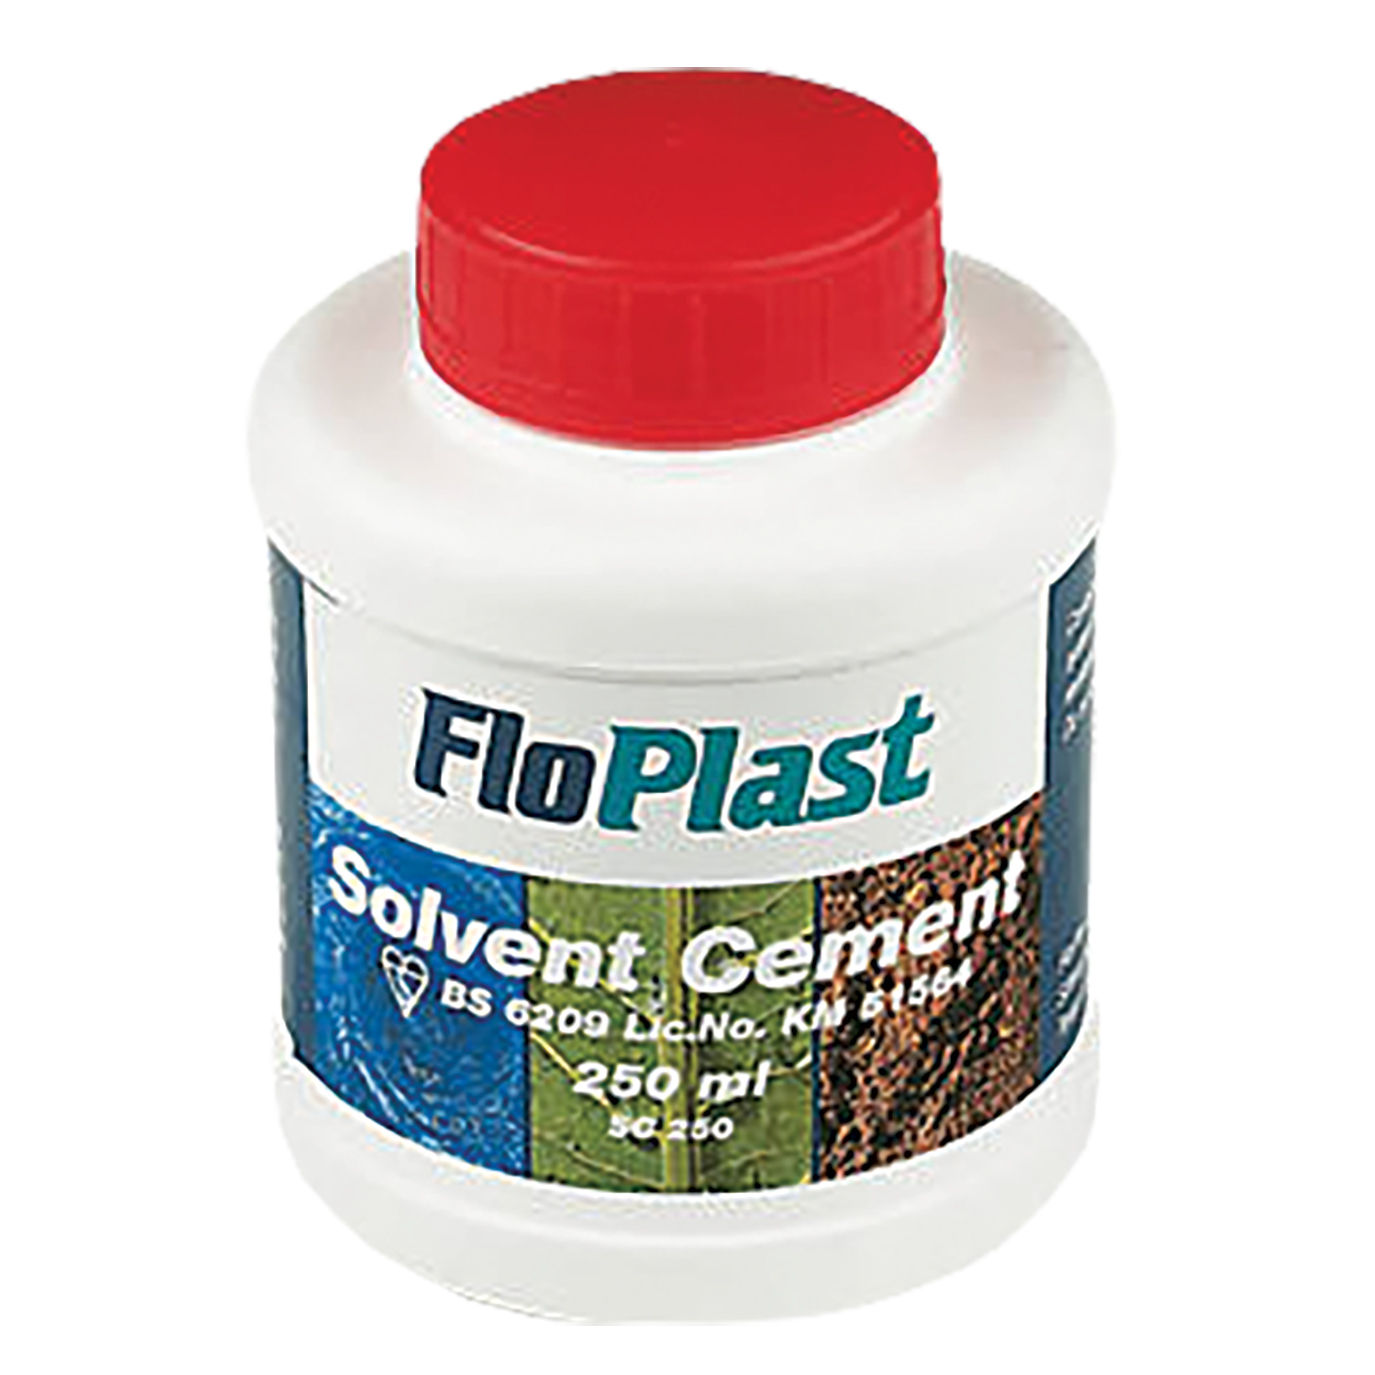 Floplast Solvent Cement 250ml - FLOSC250